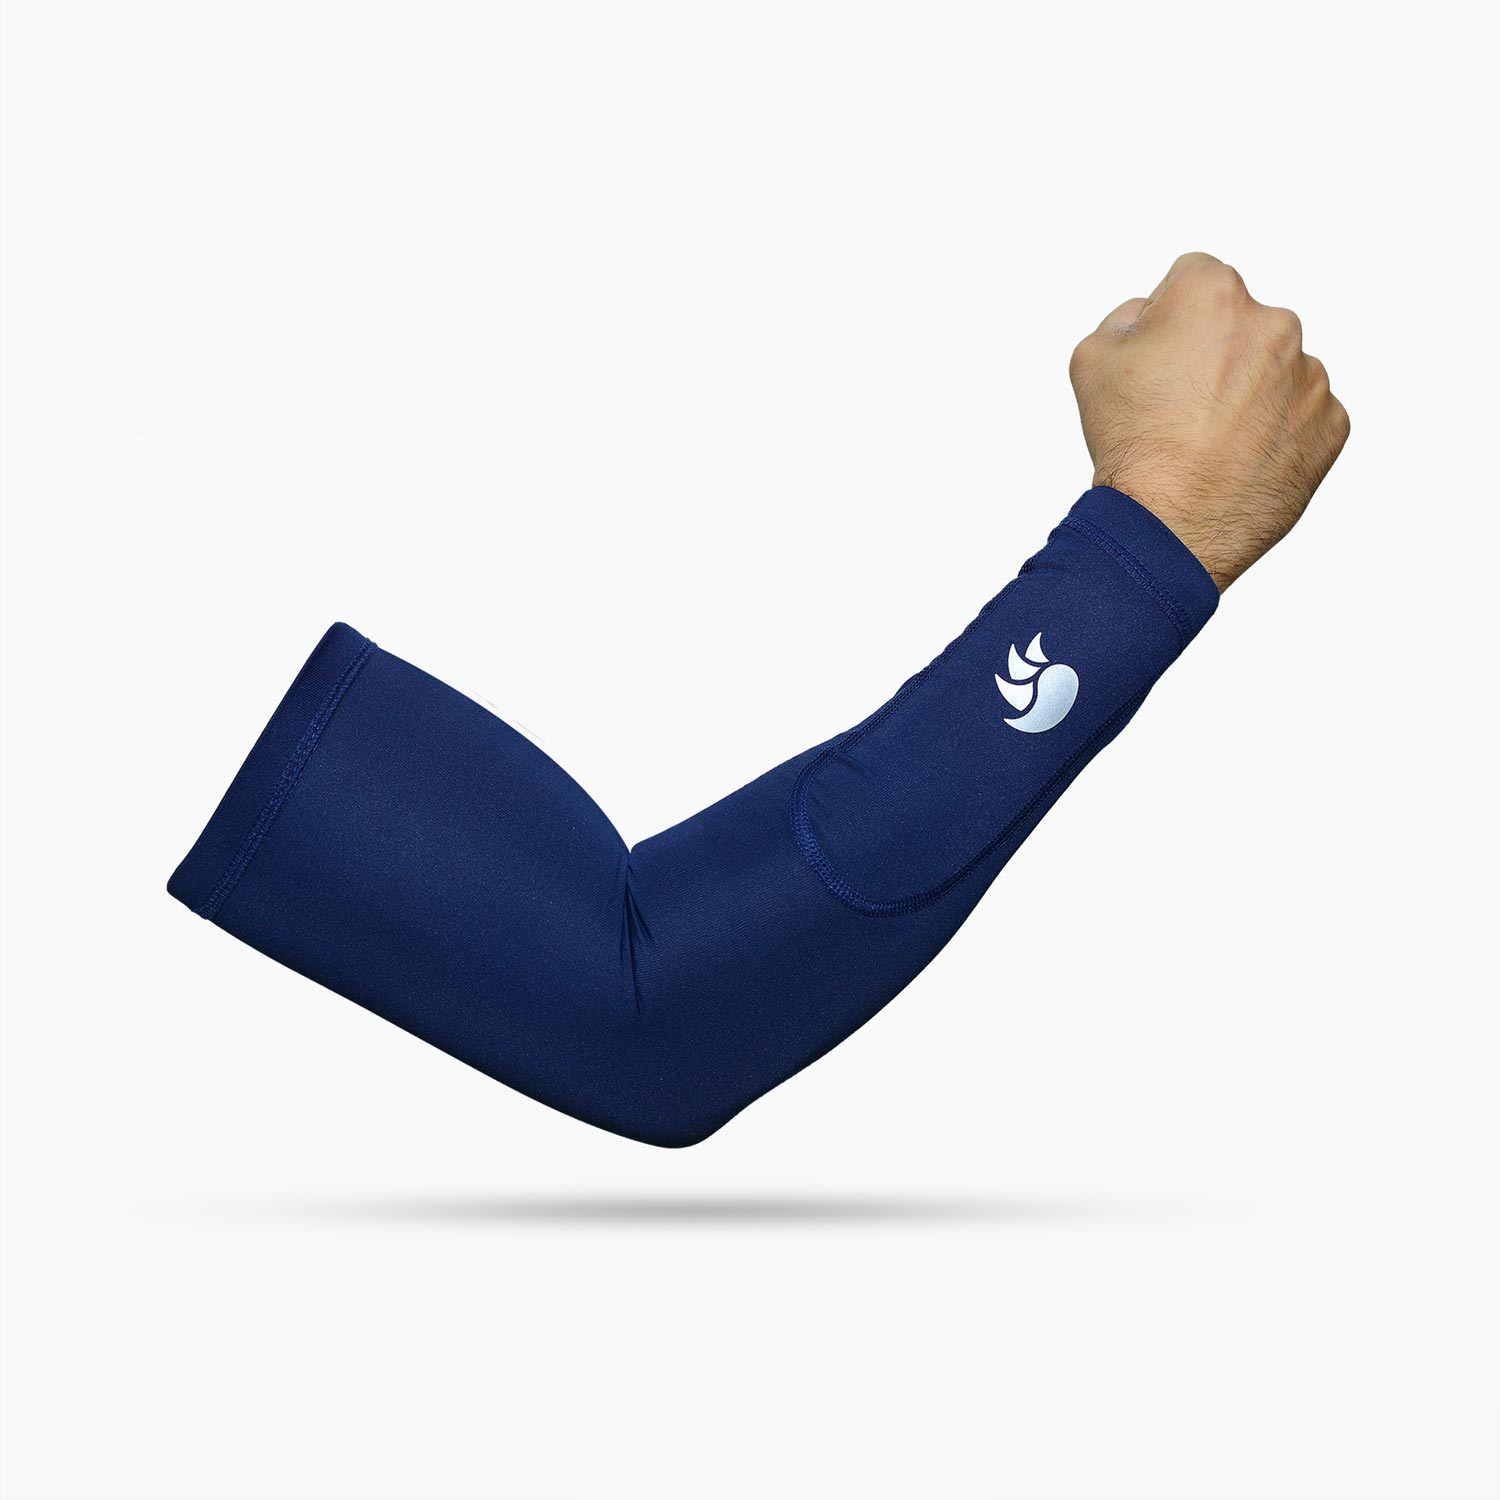 https://cdnmedia.dsc-cricket.com/media/catalog/product/a/r/arm-sleeve-compression-navy_3.jpg